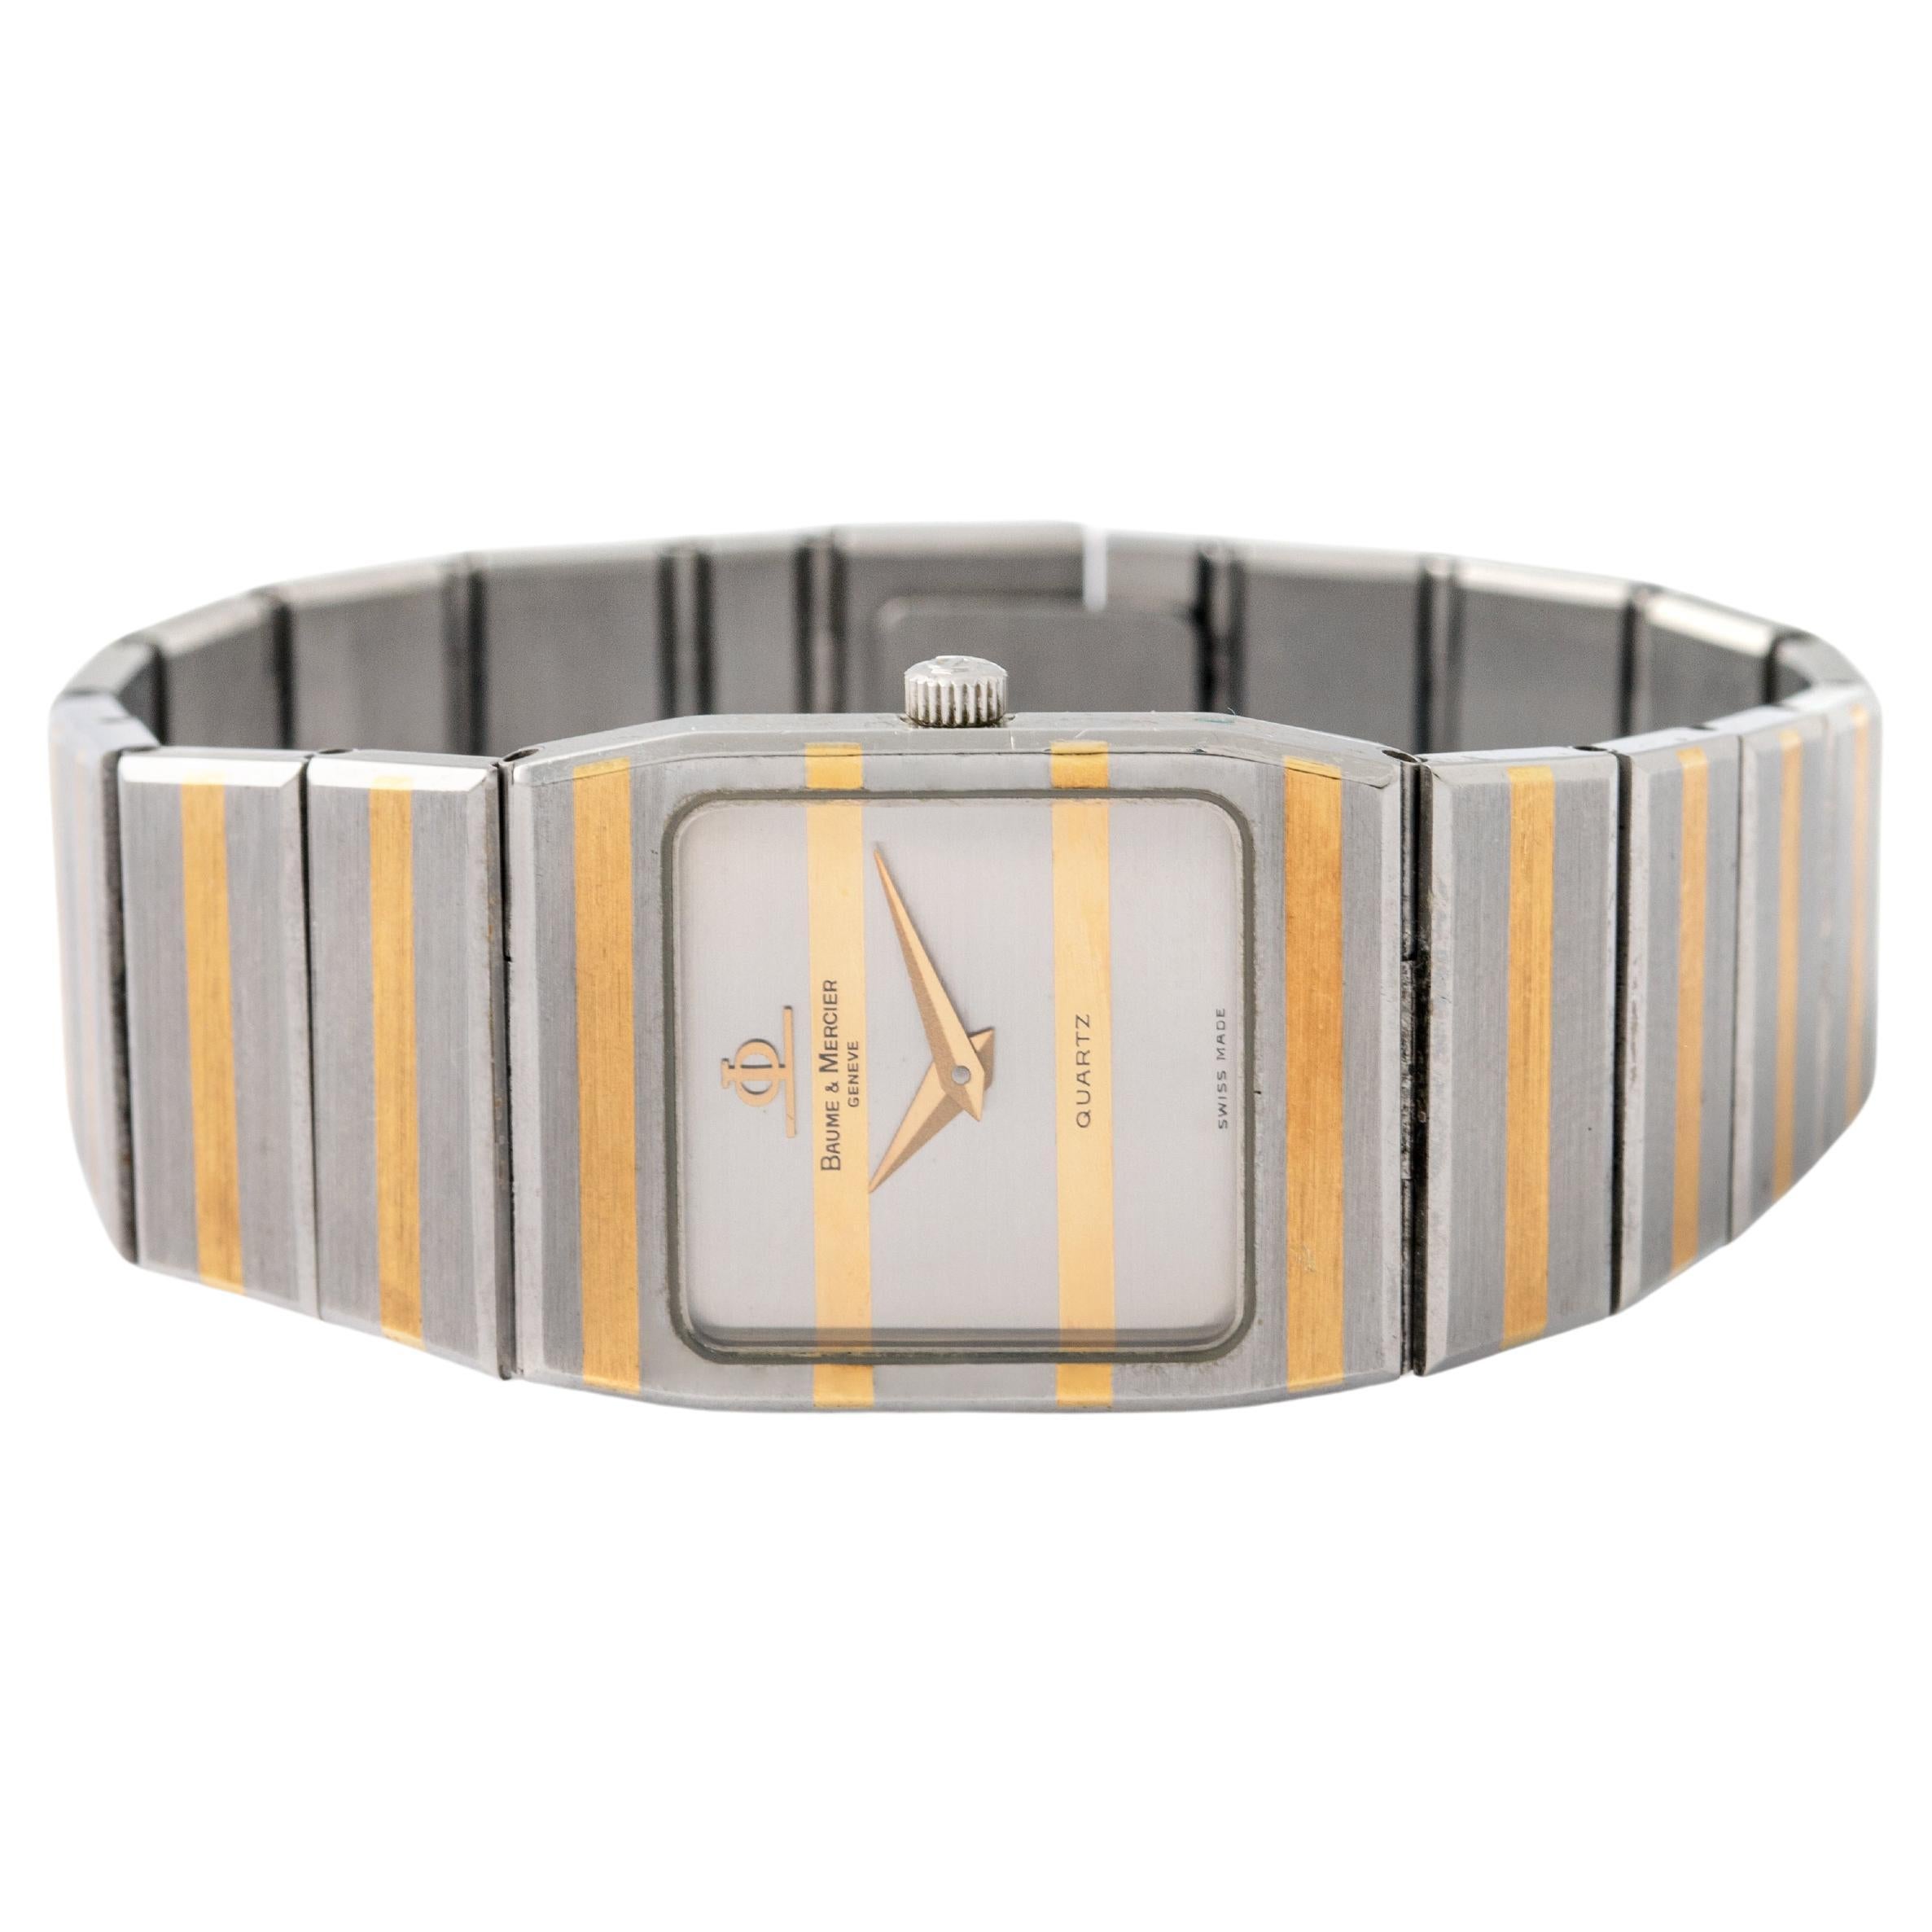 Baume & Mercier Classique Monte Carlo Stainless Steel Wristwatch